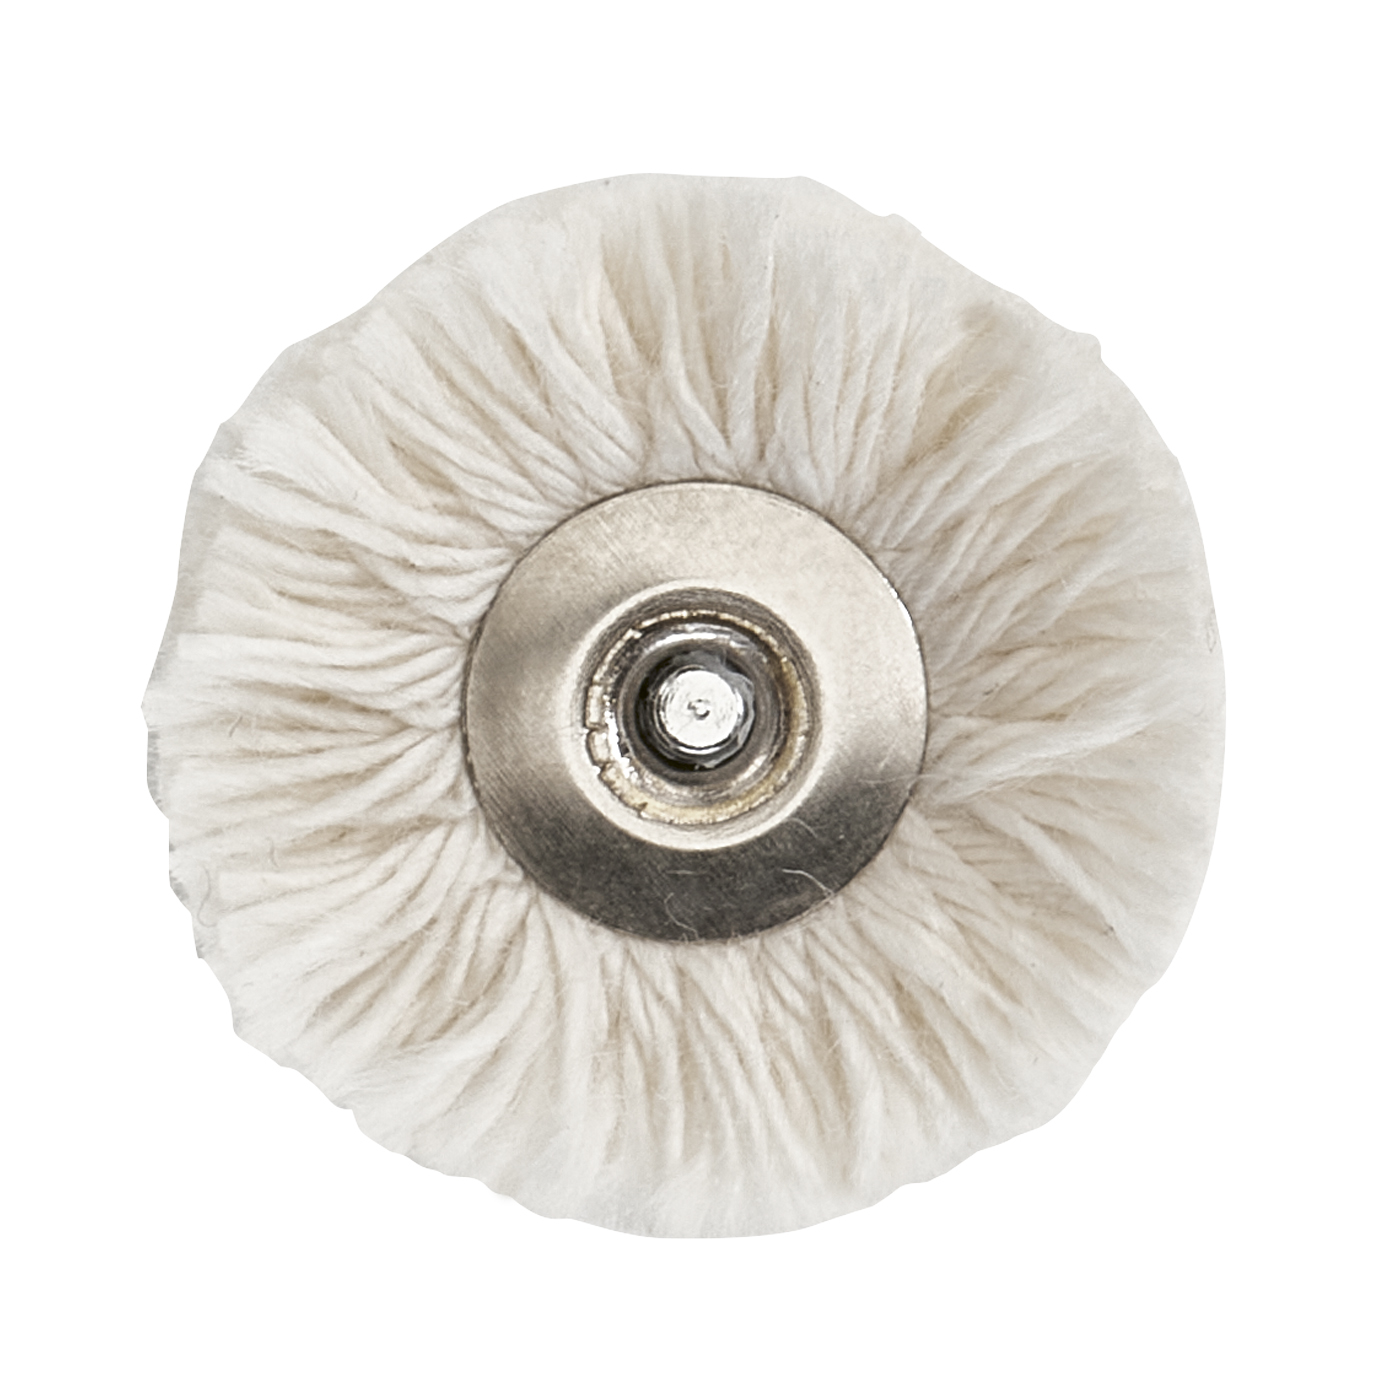 Polirapid polishing buffs, cotton yarn, white, ø 23 mm - 6 pieces